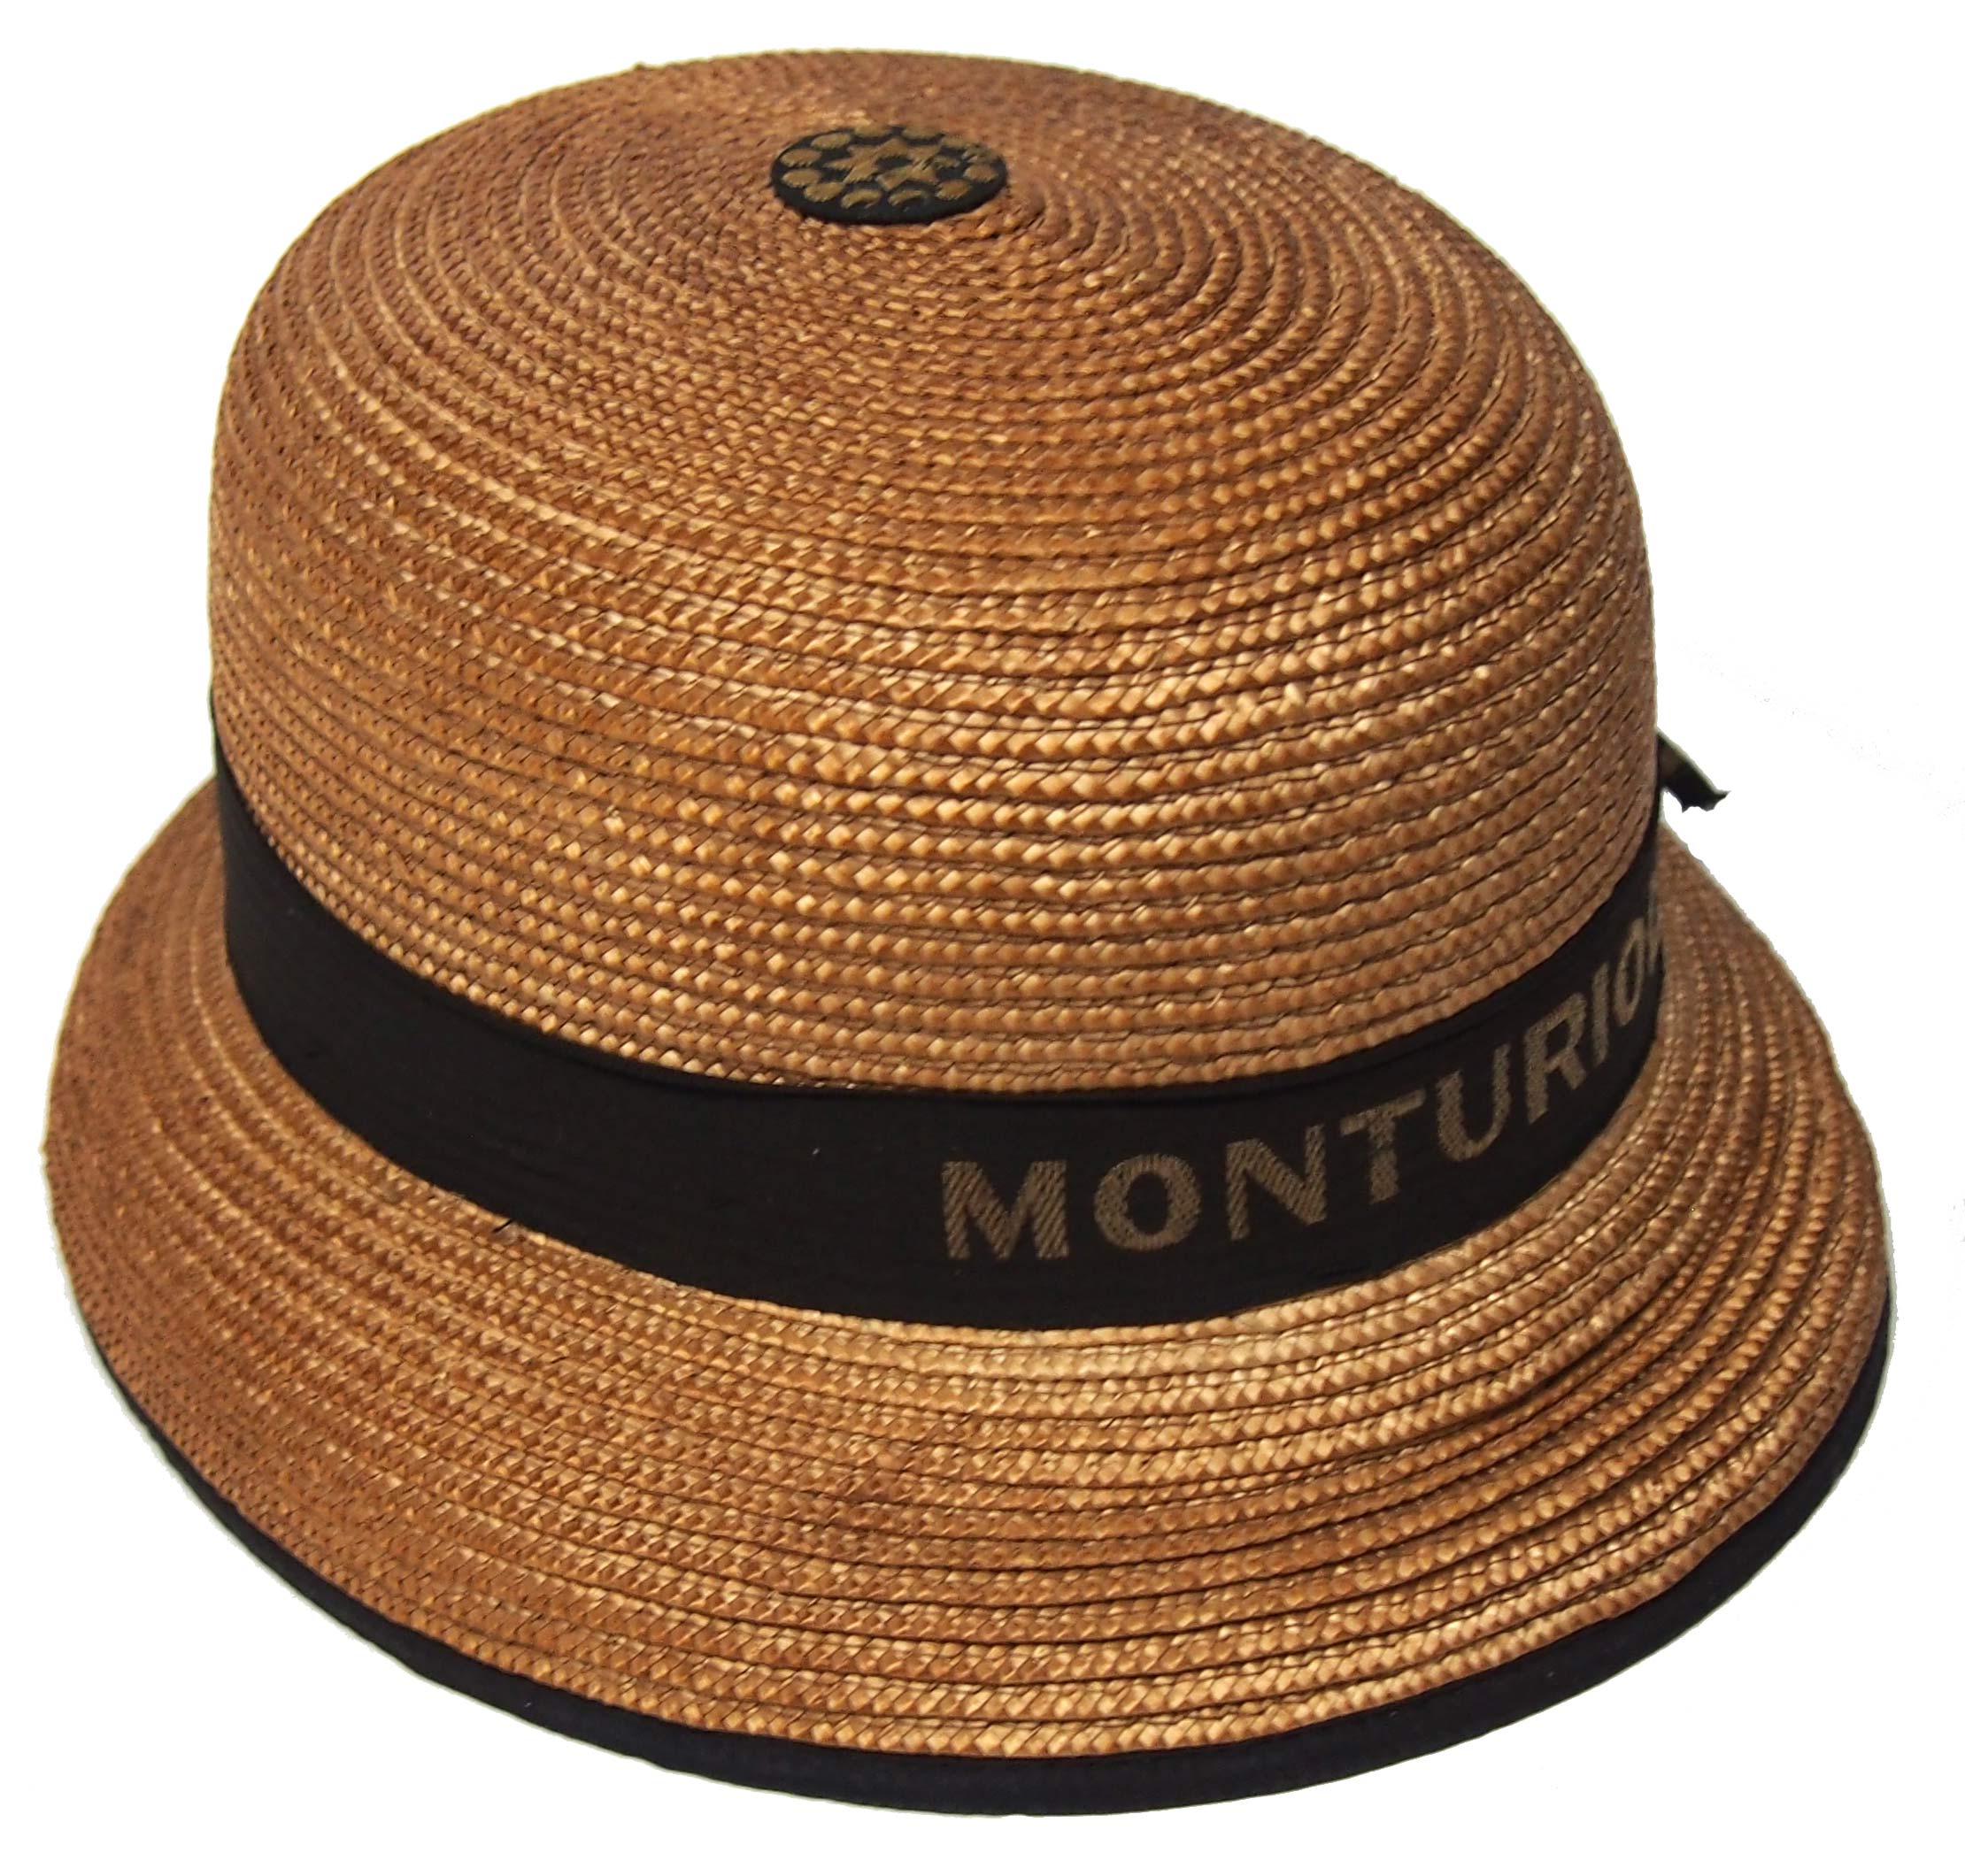 Spanish sun hat from the Monturiol